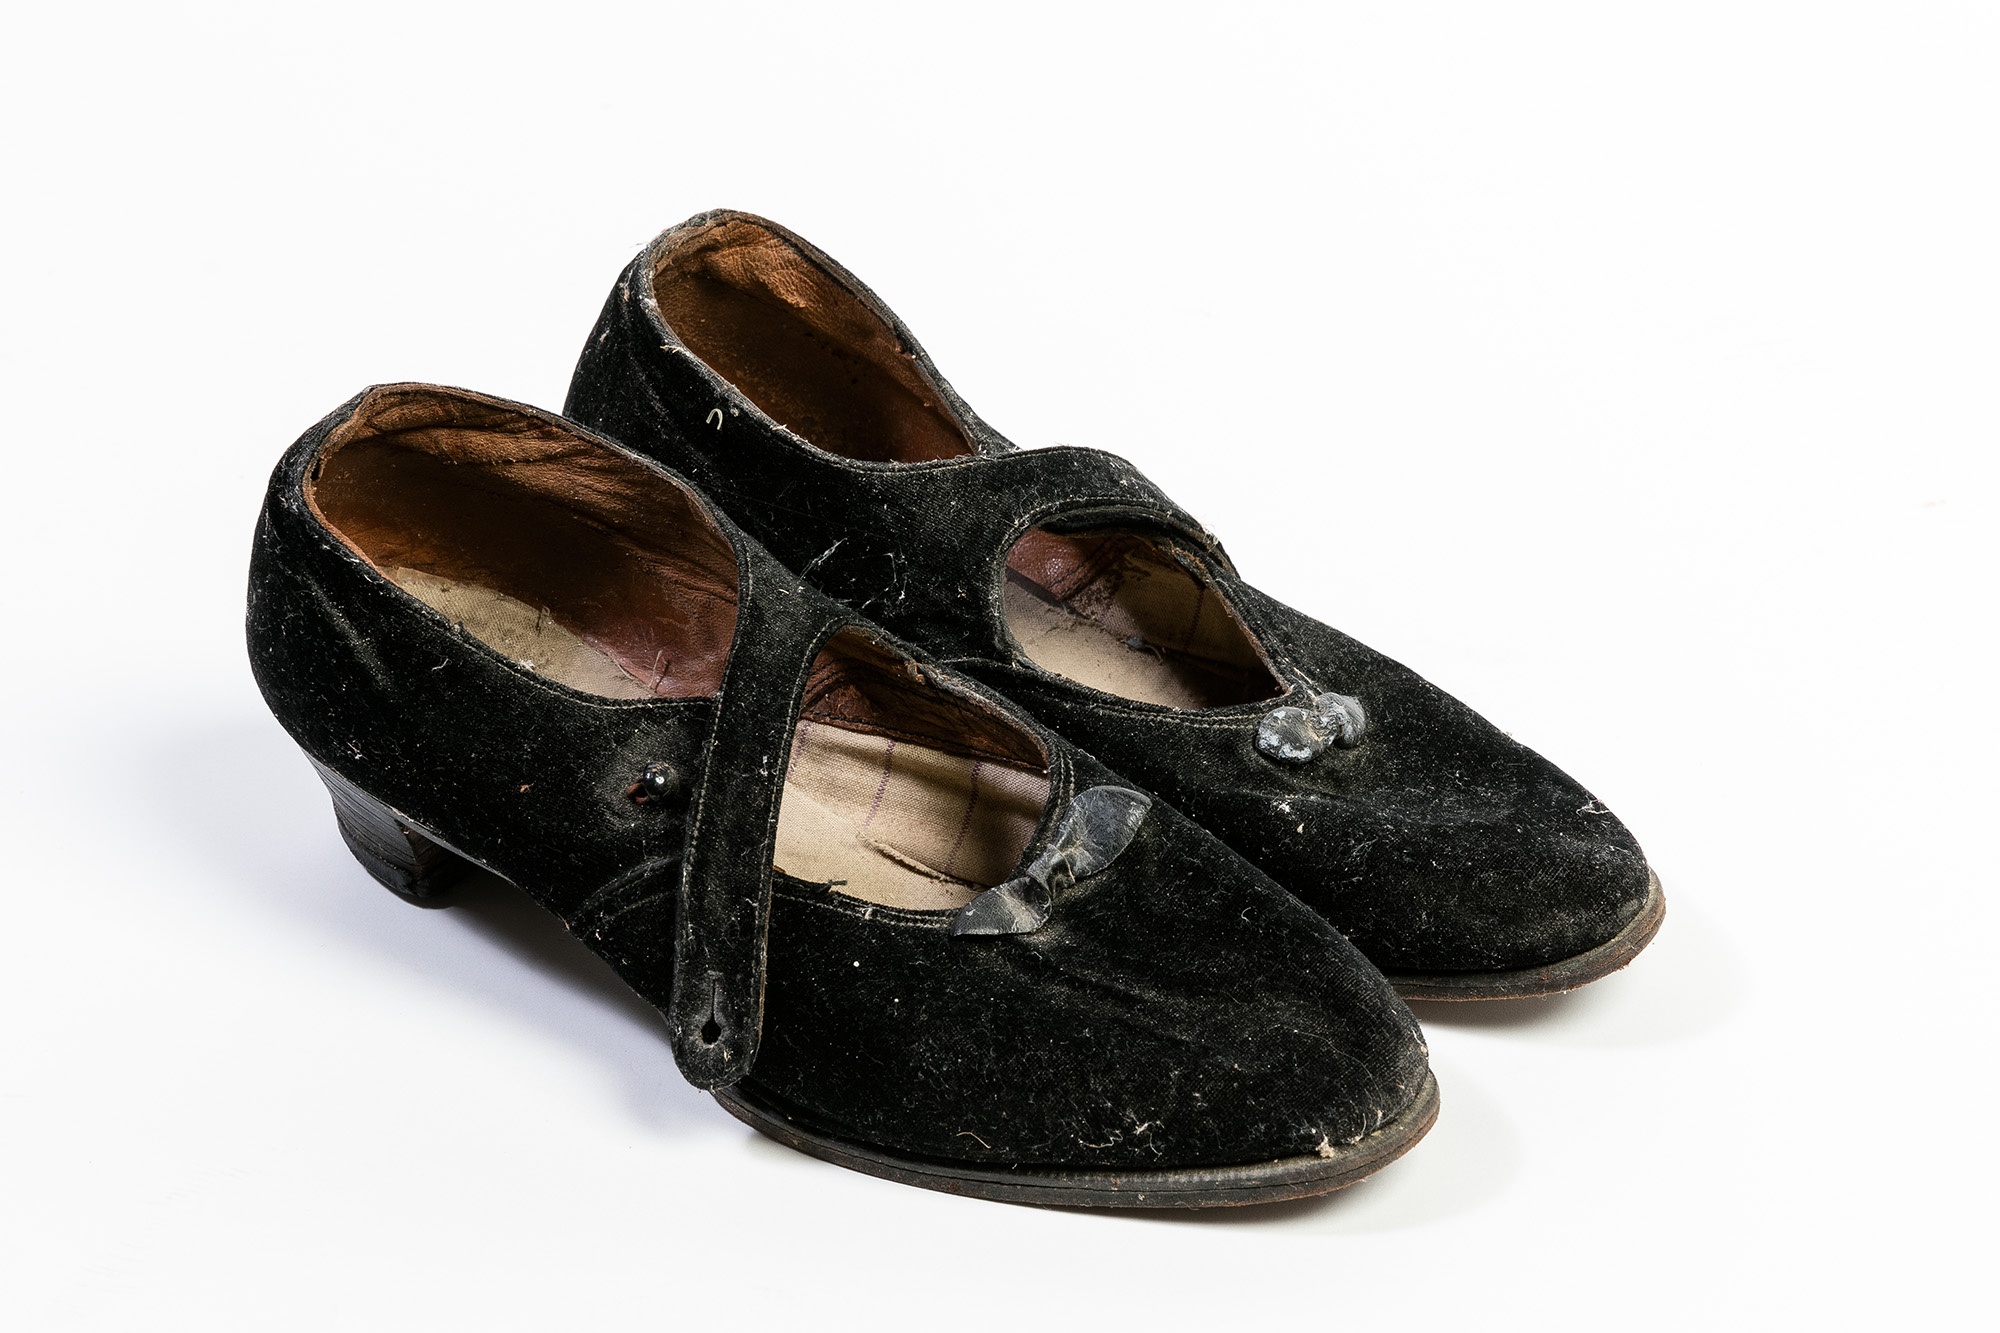 Női cipő (Györkönyi Falumúzeum CC BY-NC-SA)